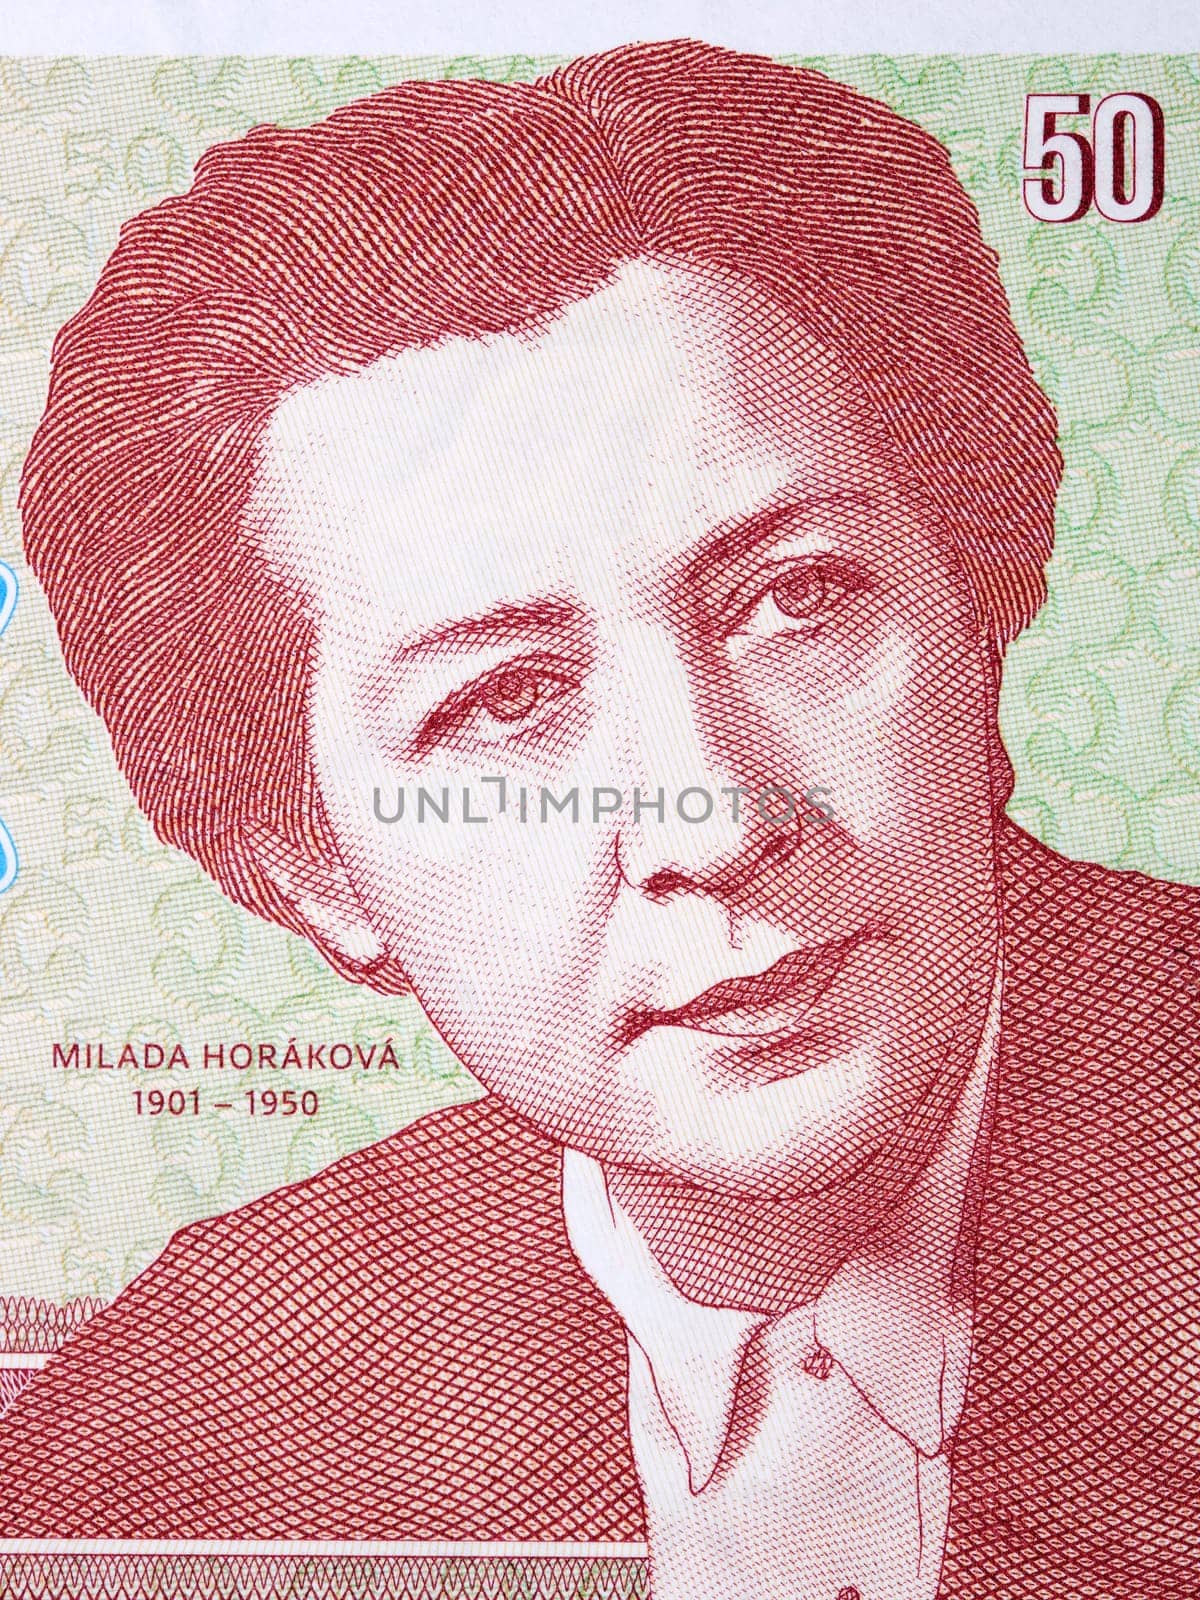 Milada Horakova a portrait from money by johan10